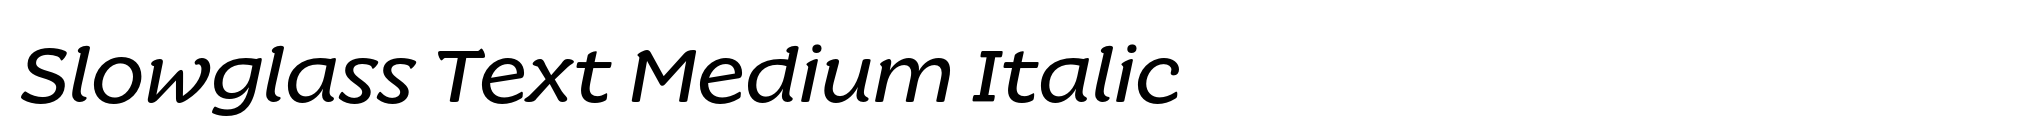 Slowglass Text Medium Italic image